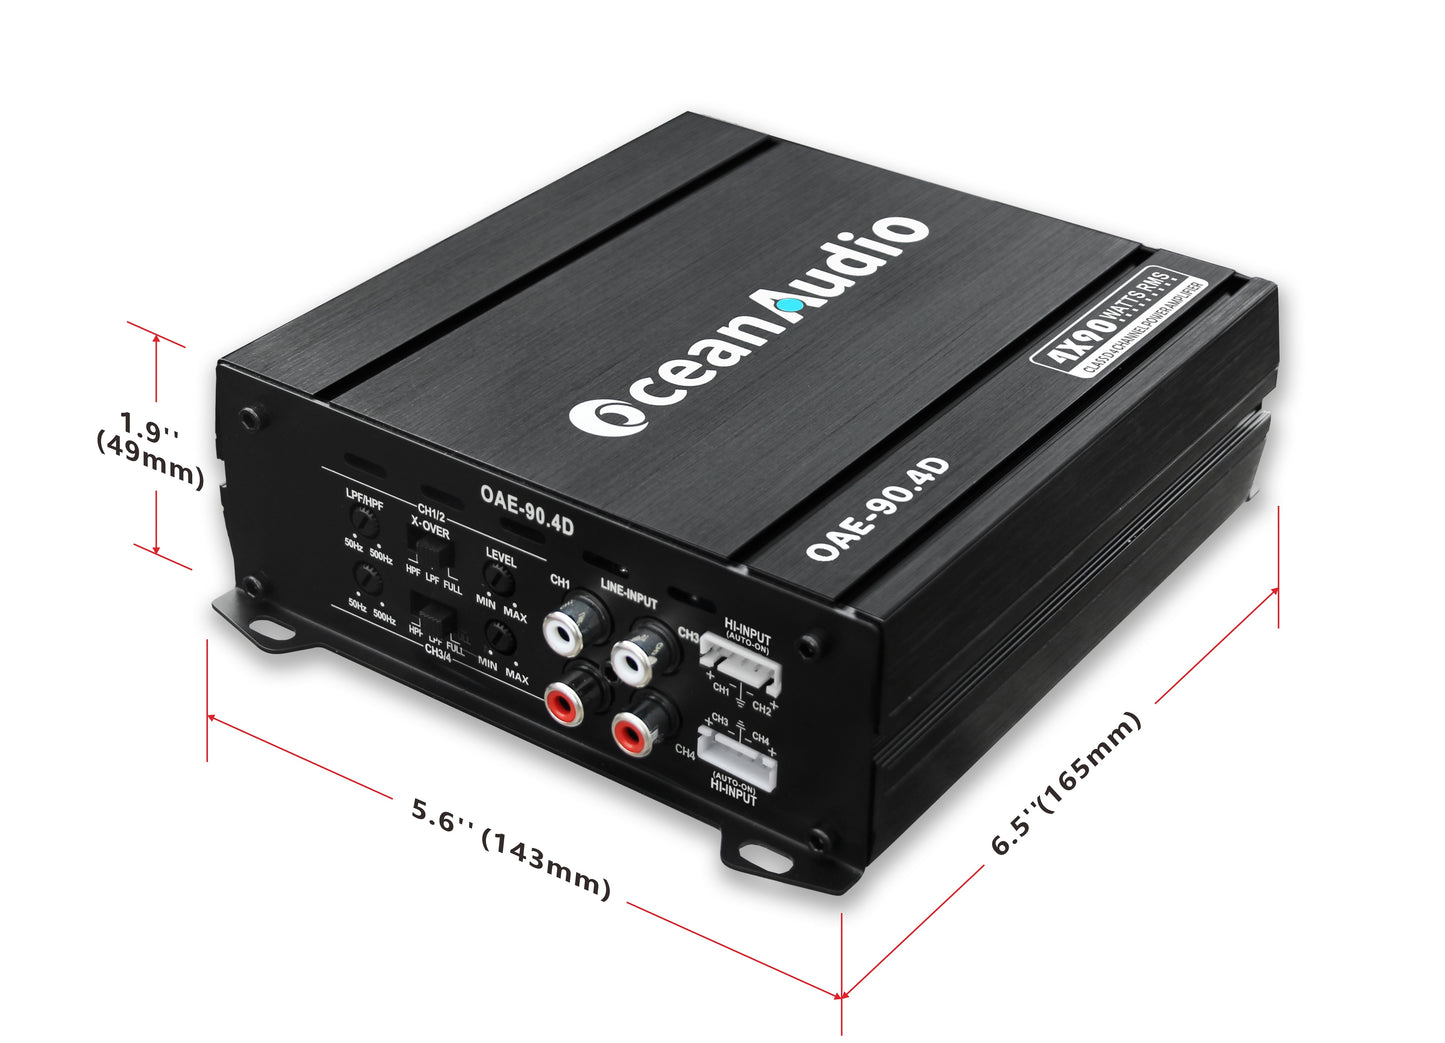 OceanAudio OAE-90.4D Compact Full-Range Class D 4 Channel Car Amplifier, 720W - RMS Power @4Ω 4*60W, @2Ω 4*90W Max Power @2Ω 4*180W